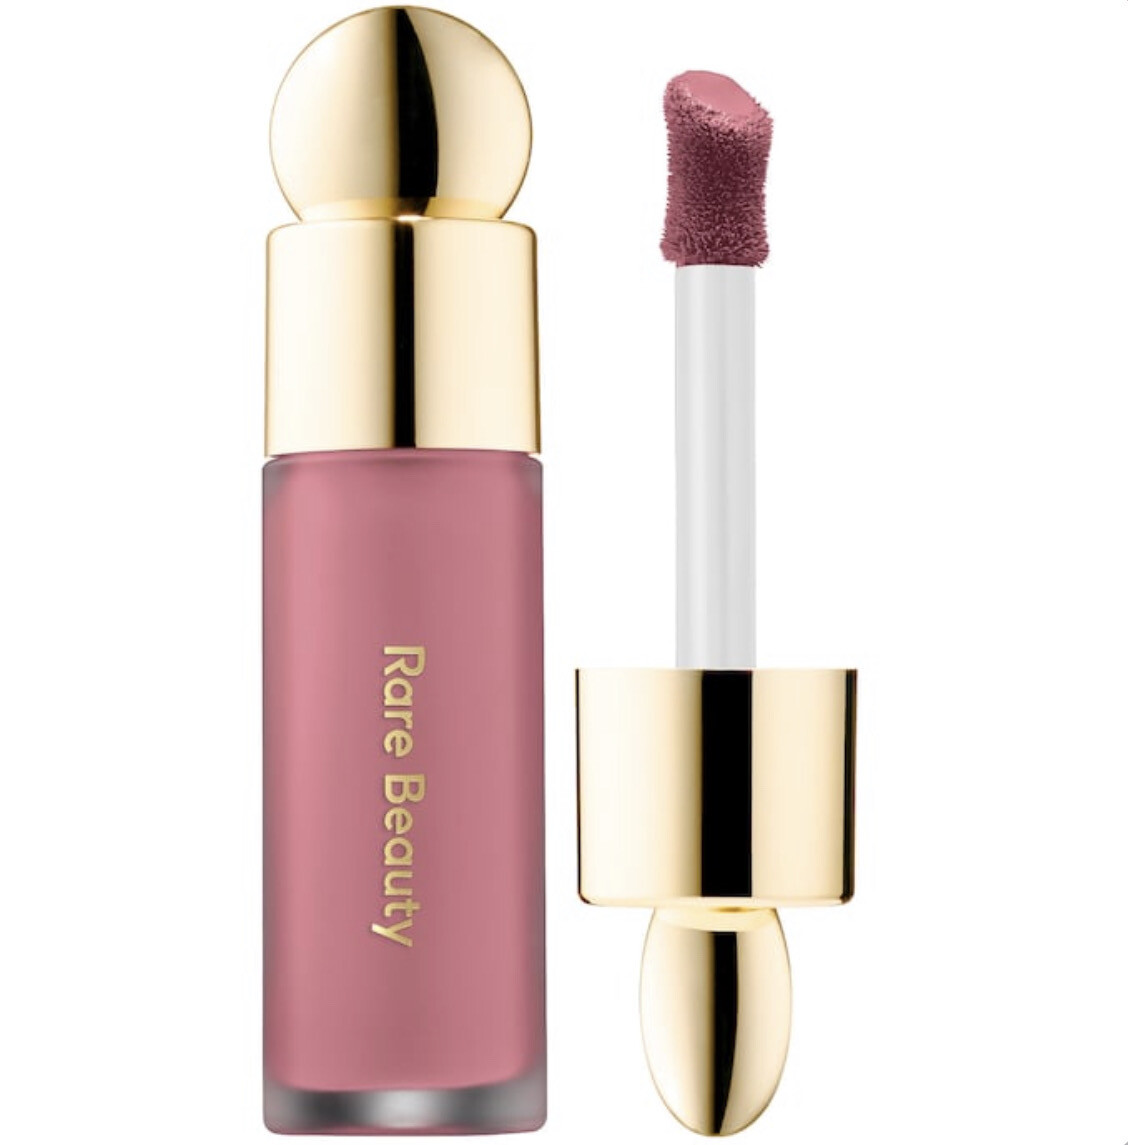 Rare Beauty - Soft Pinch Liquid Blush | Encourage - soft neutral pink